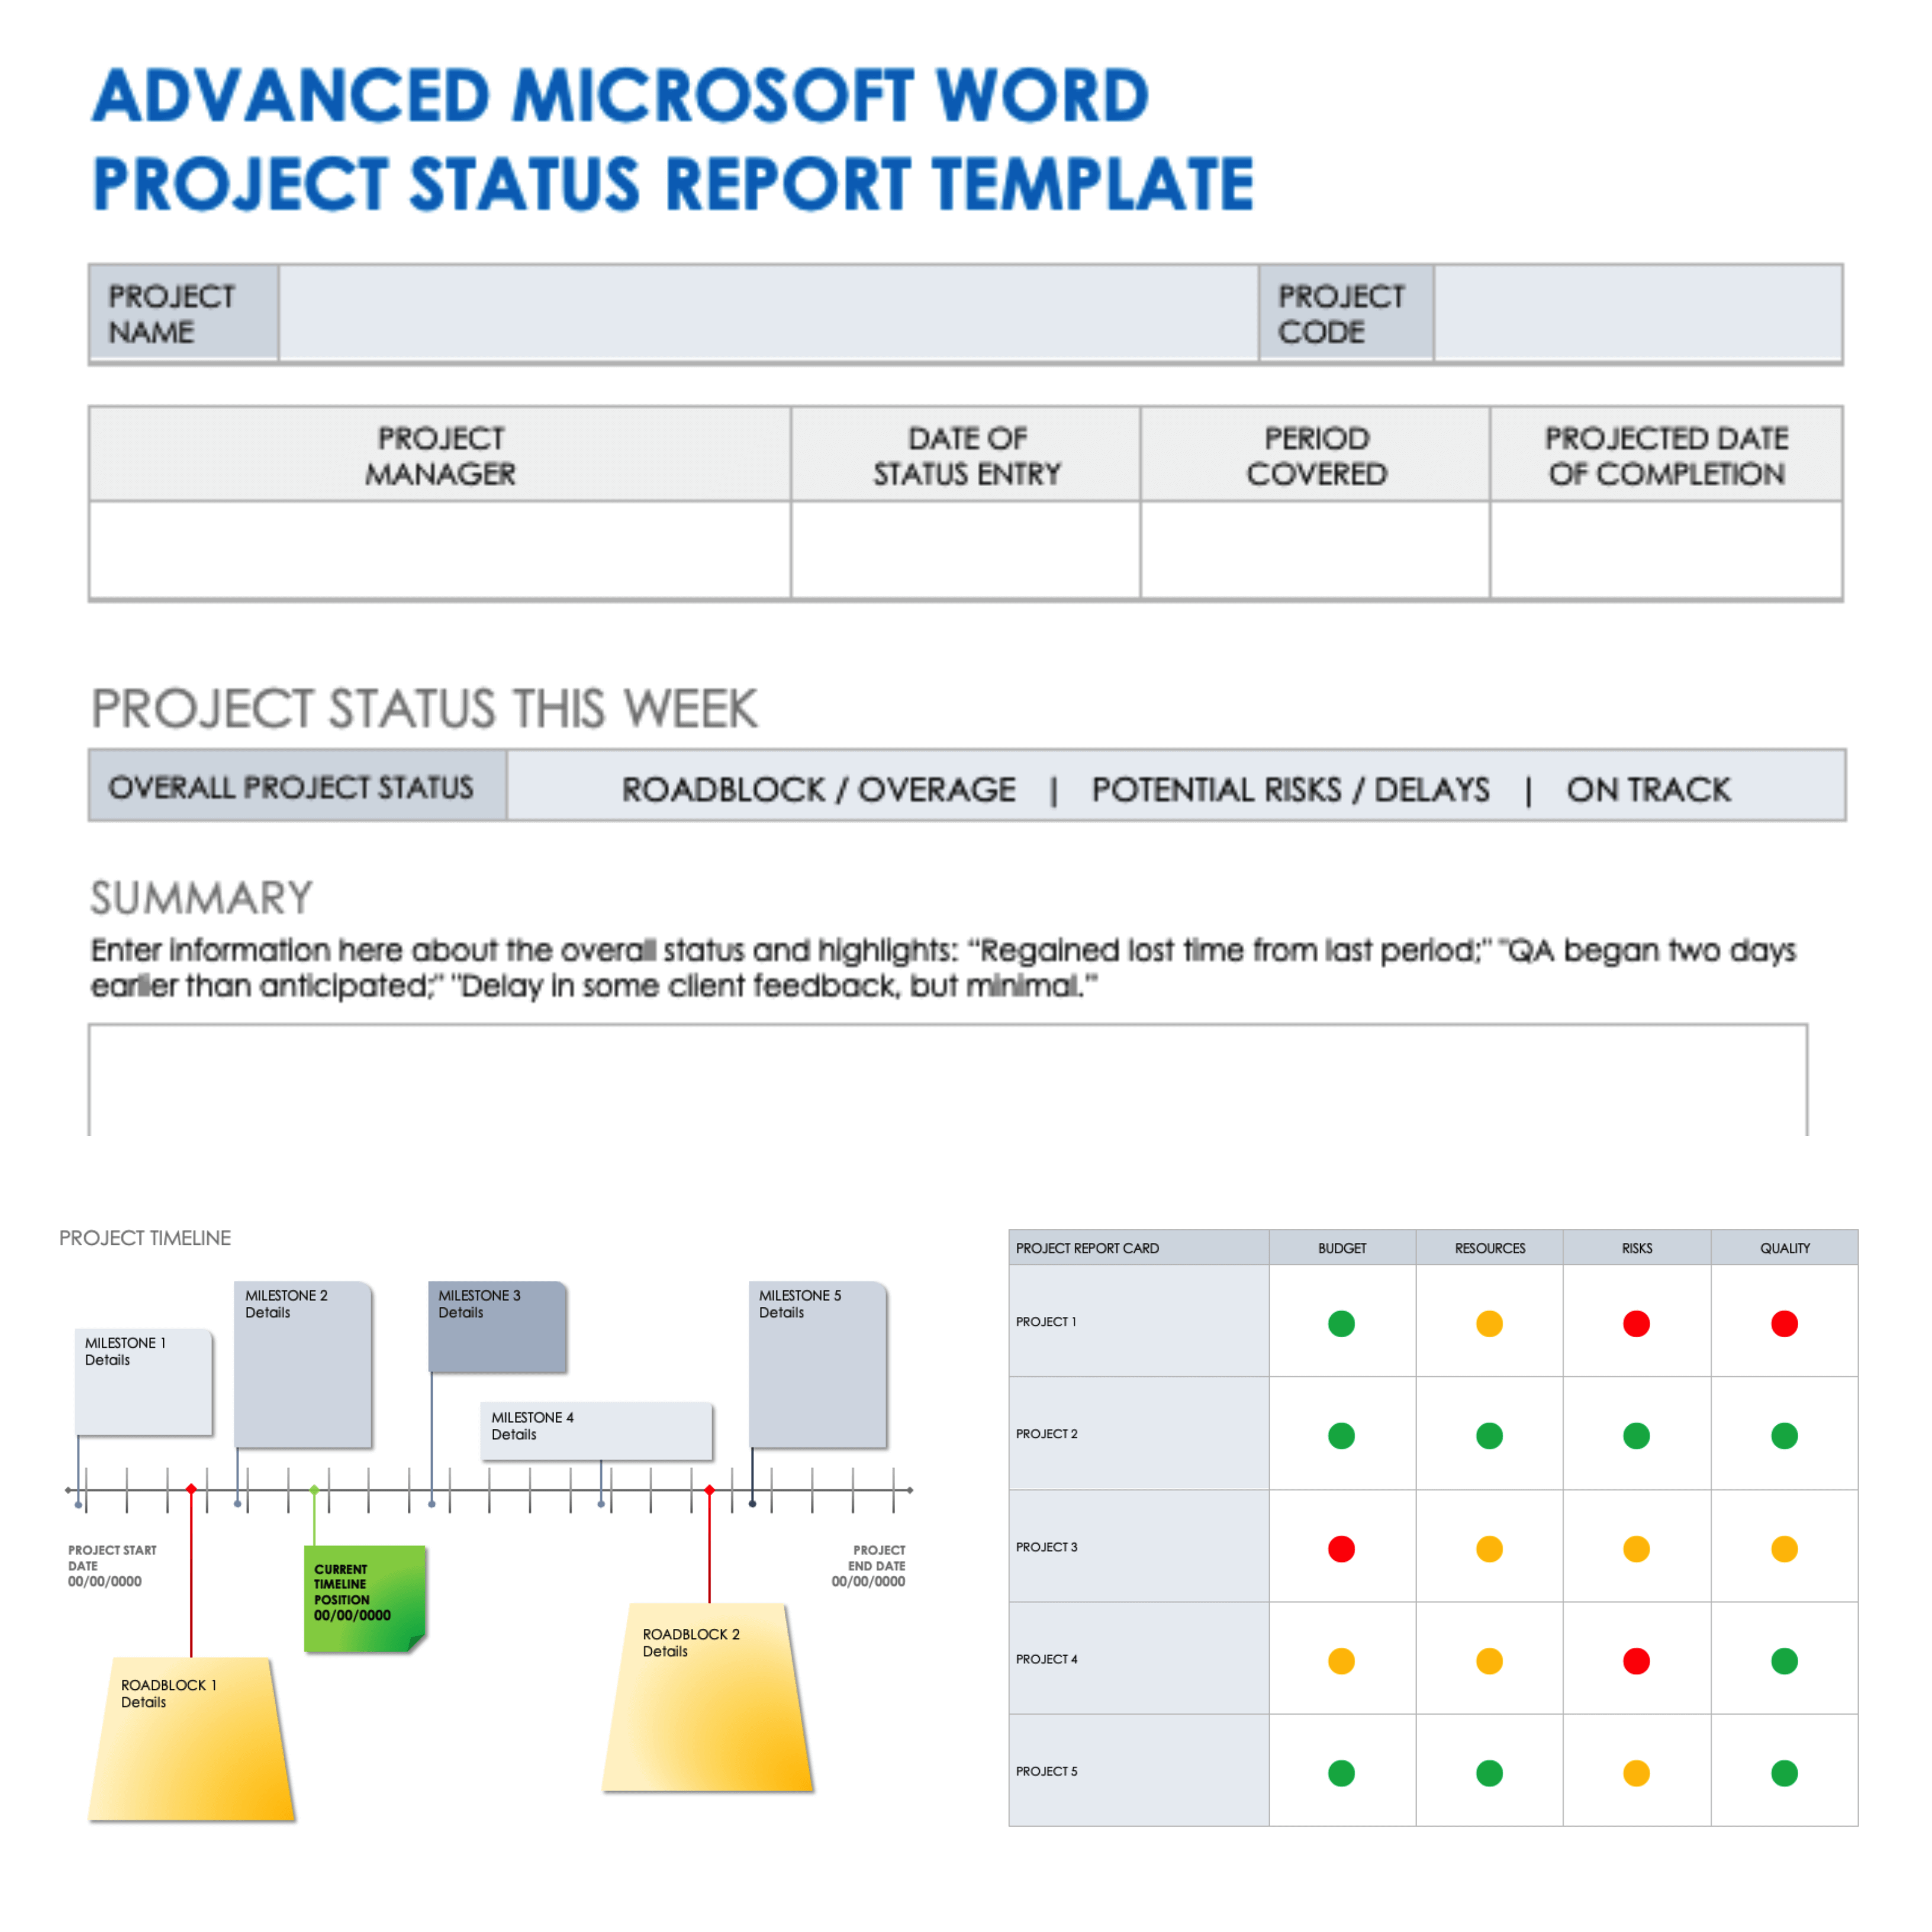 Advanced Microsoft Word Project Status Report Template